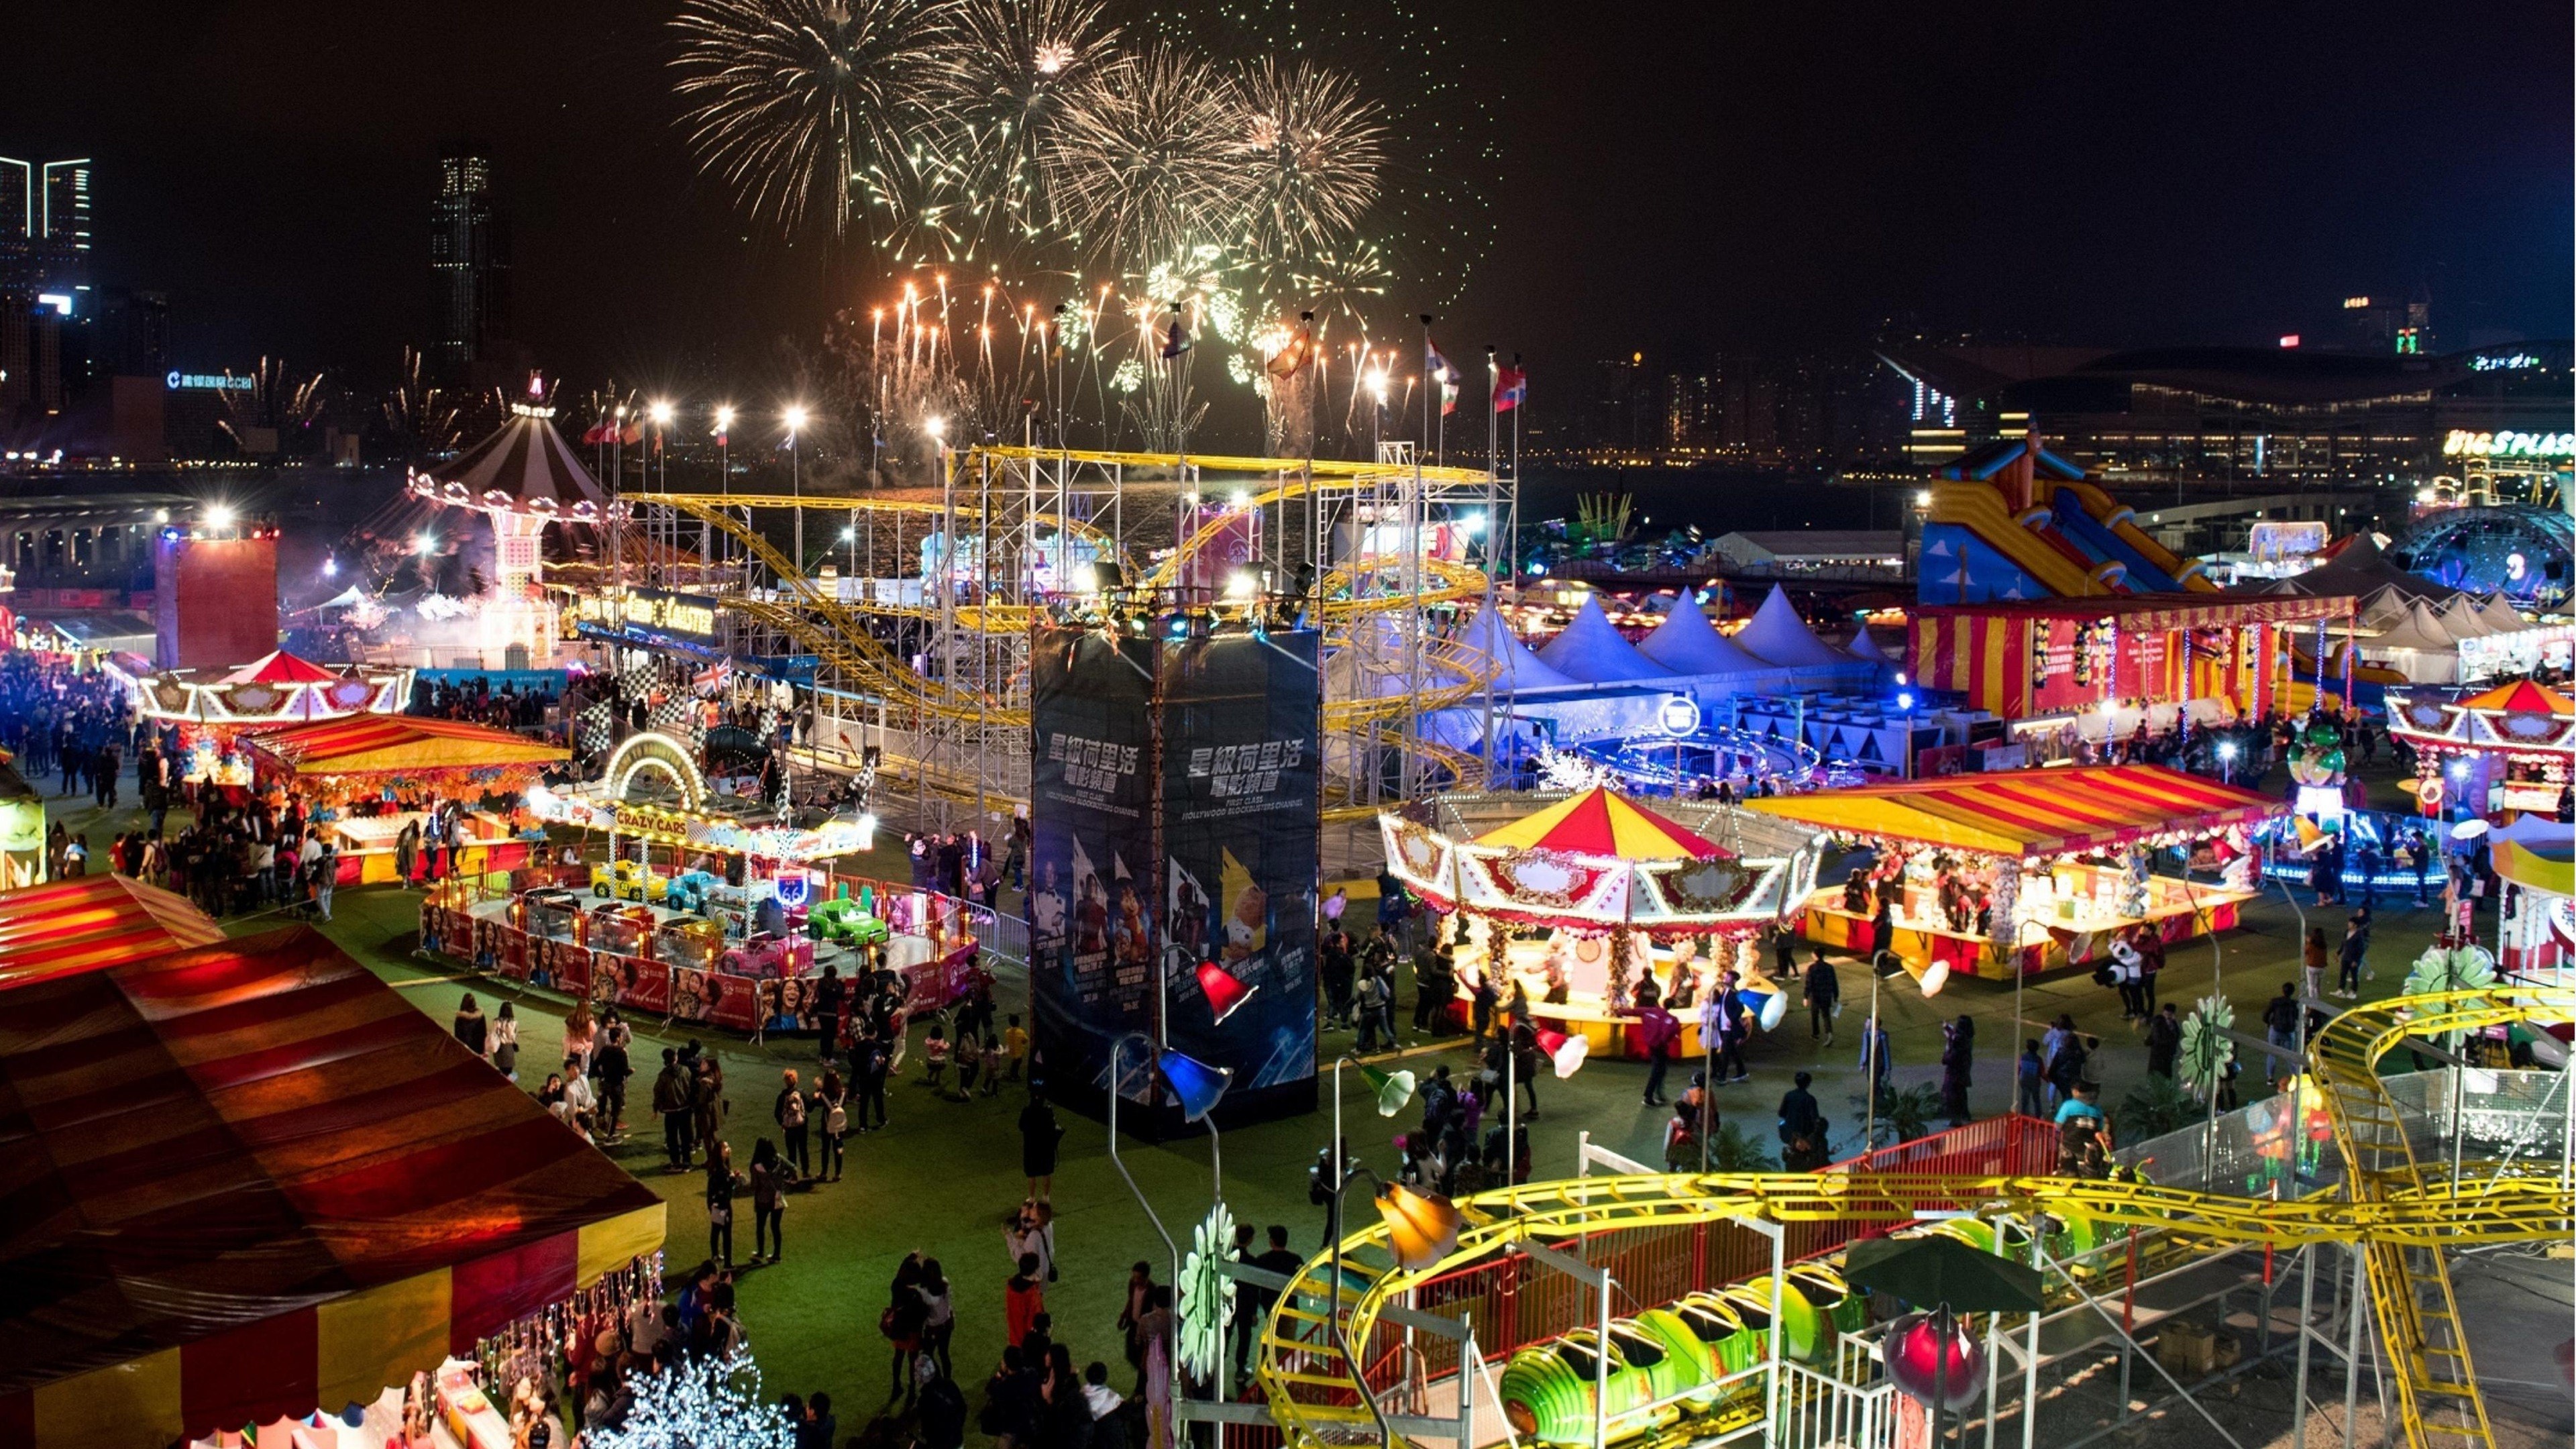 Fun Fair: Carnival, Festival, Food vendors, Merchandise vendors. 3840x2160 4K Wallpaper.